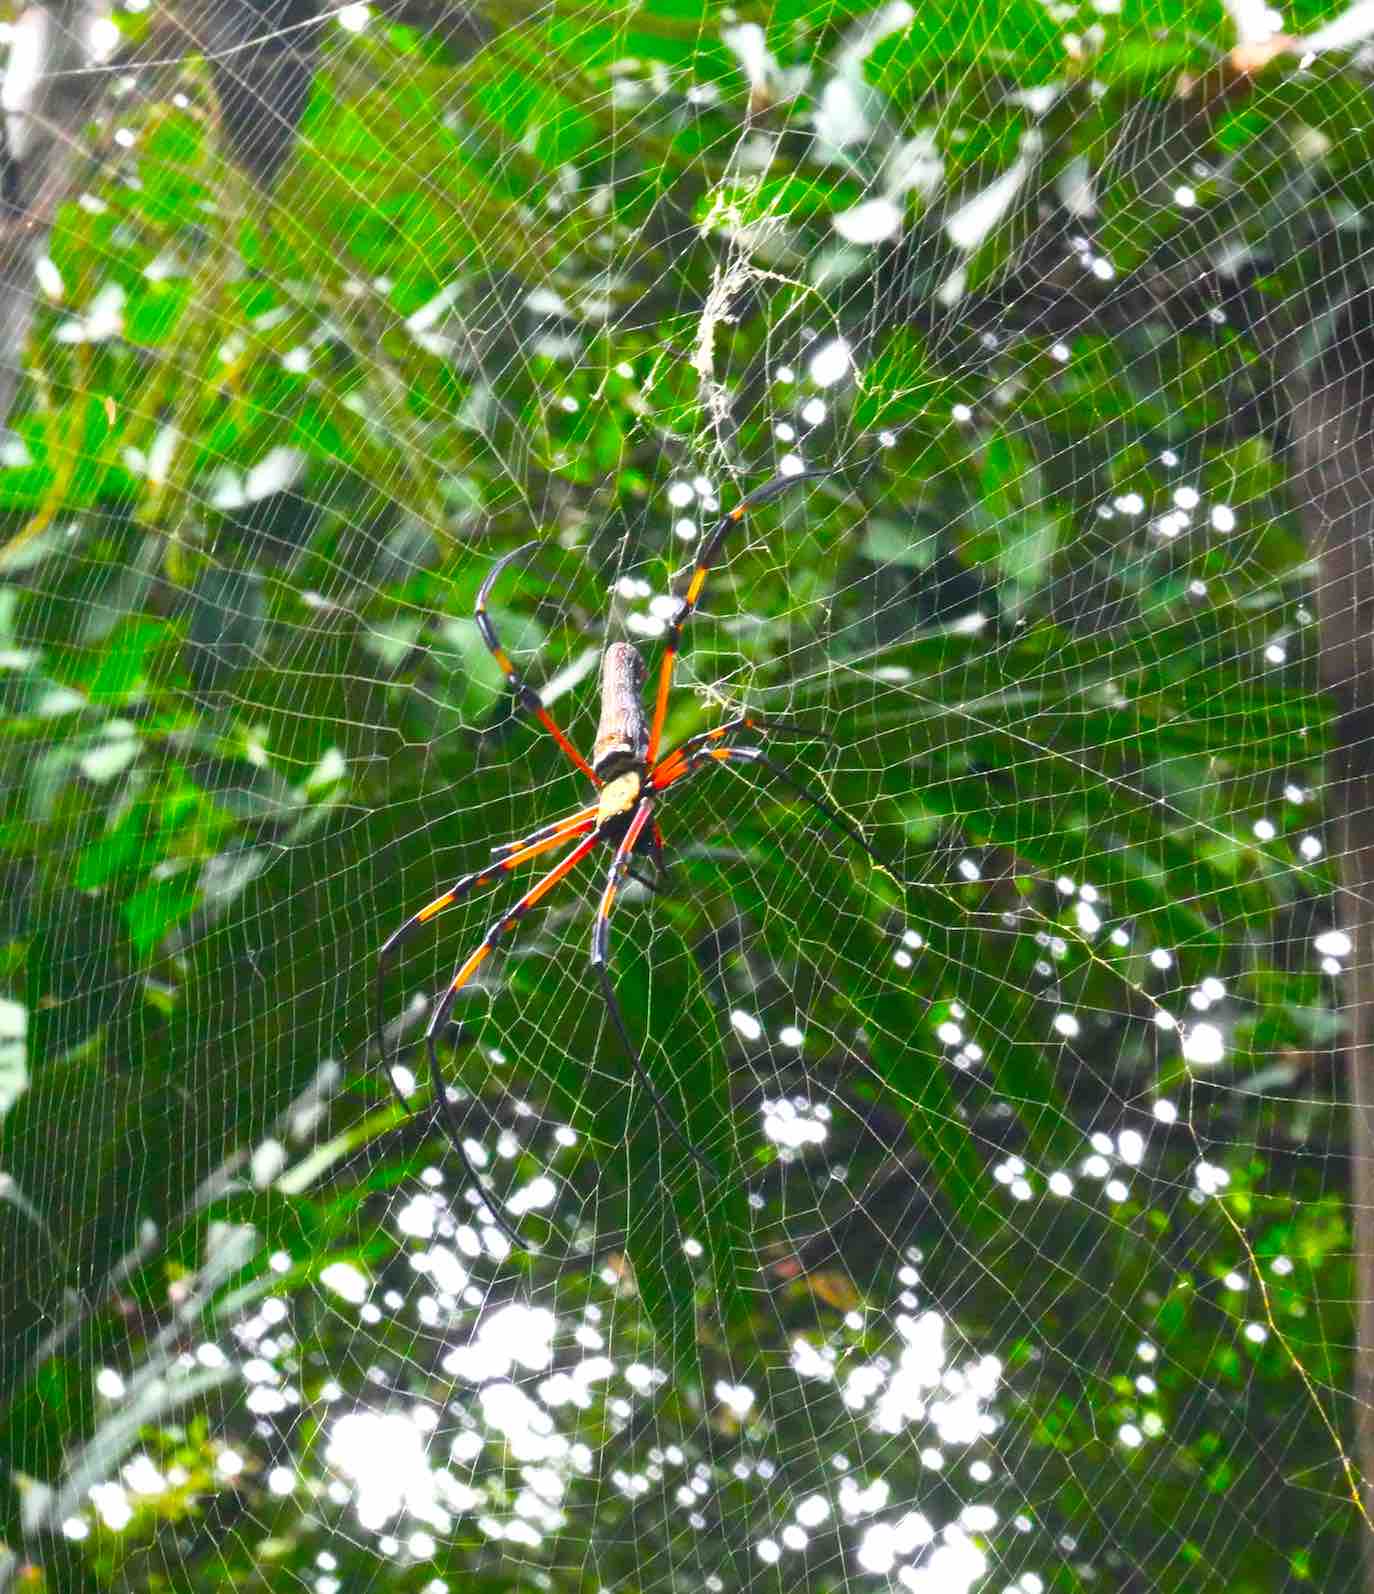 colour-spider-sighted-at-kl-canopy-walk-aspirantsg